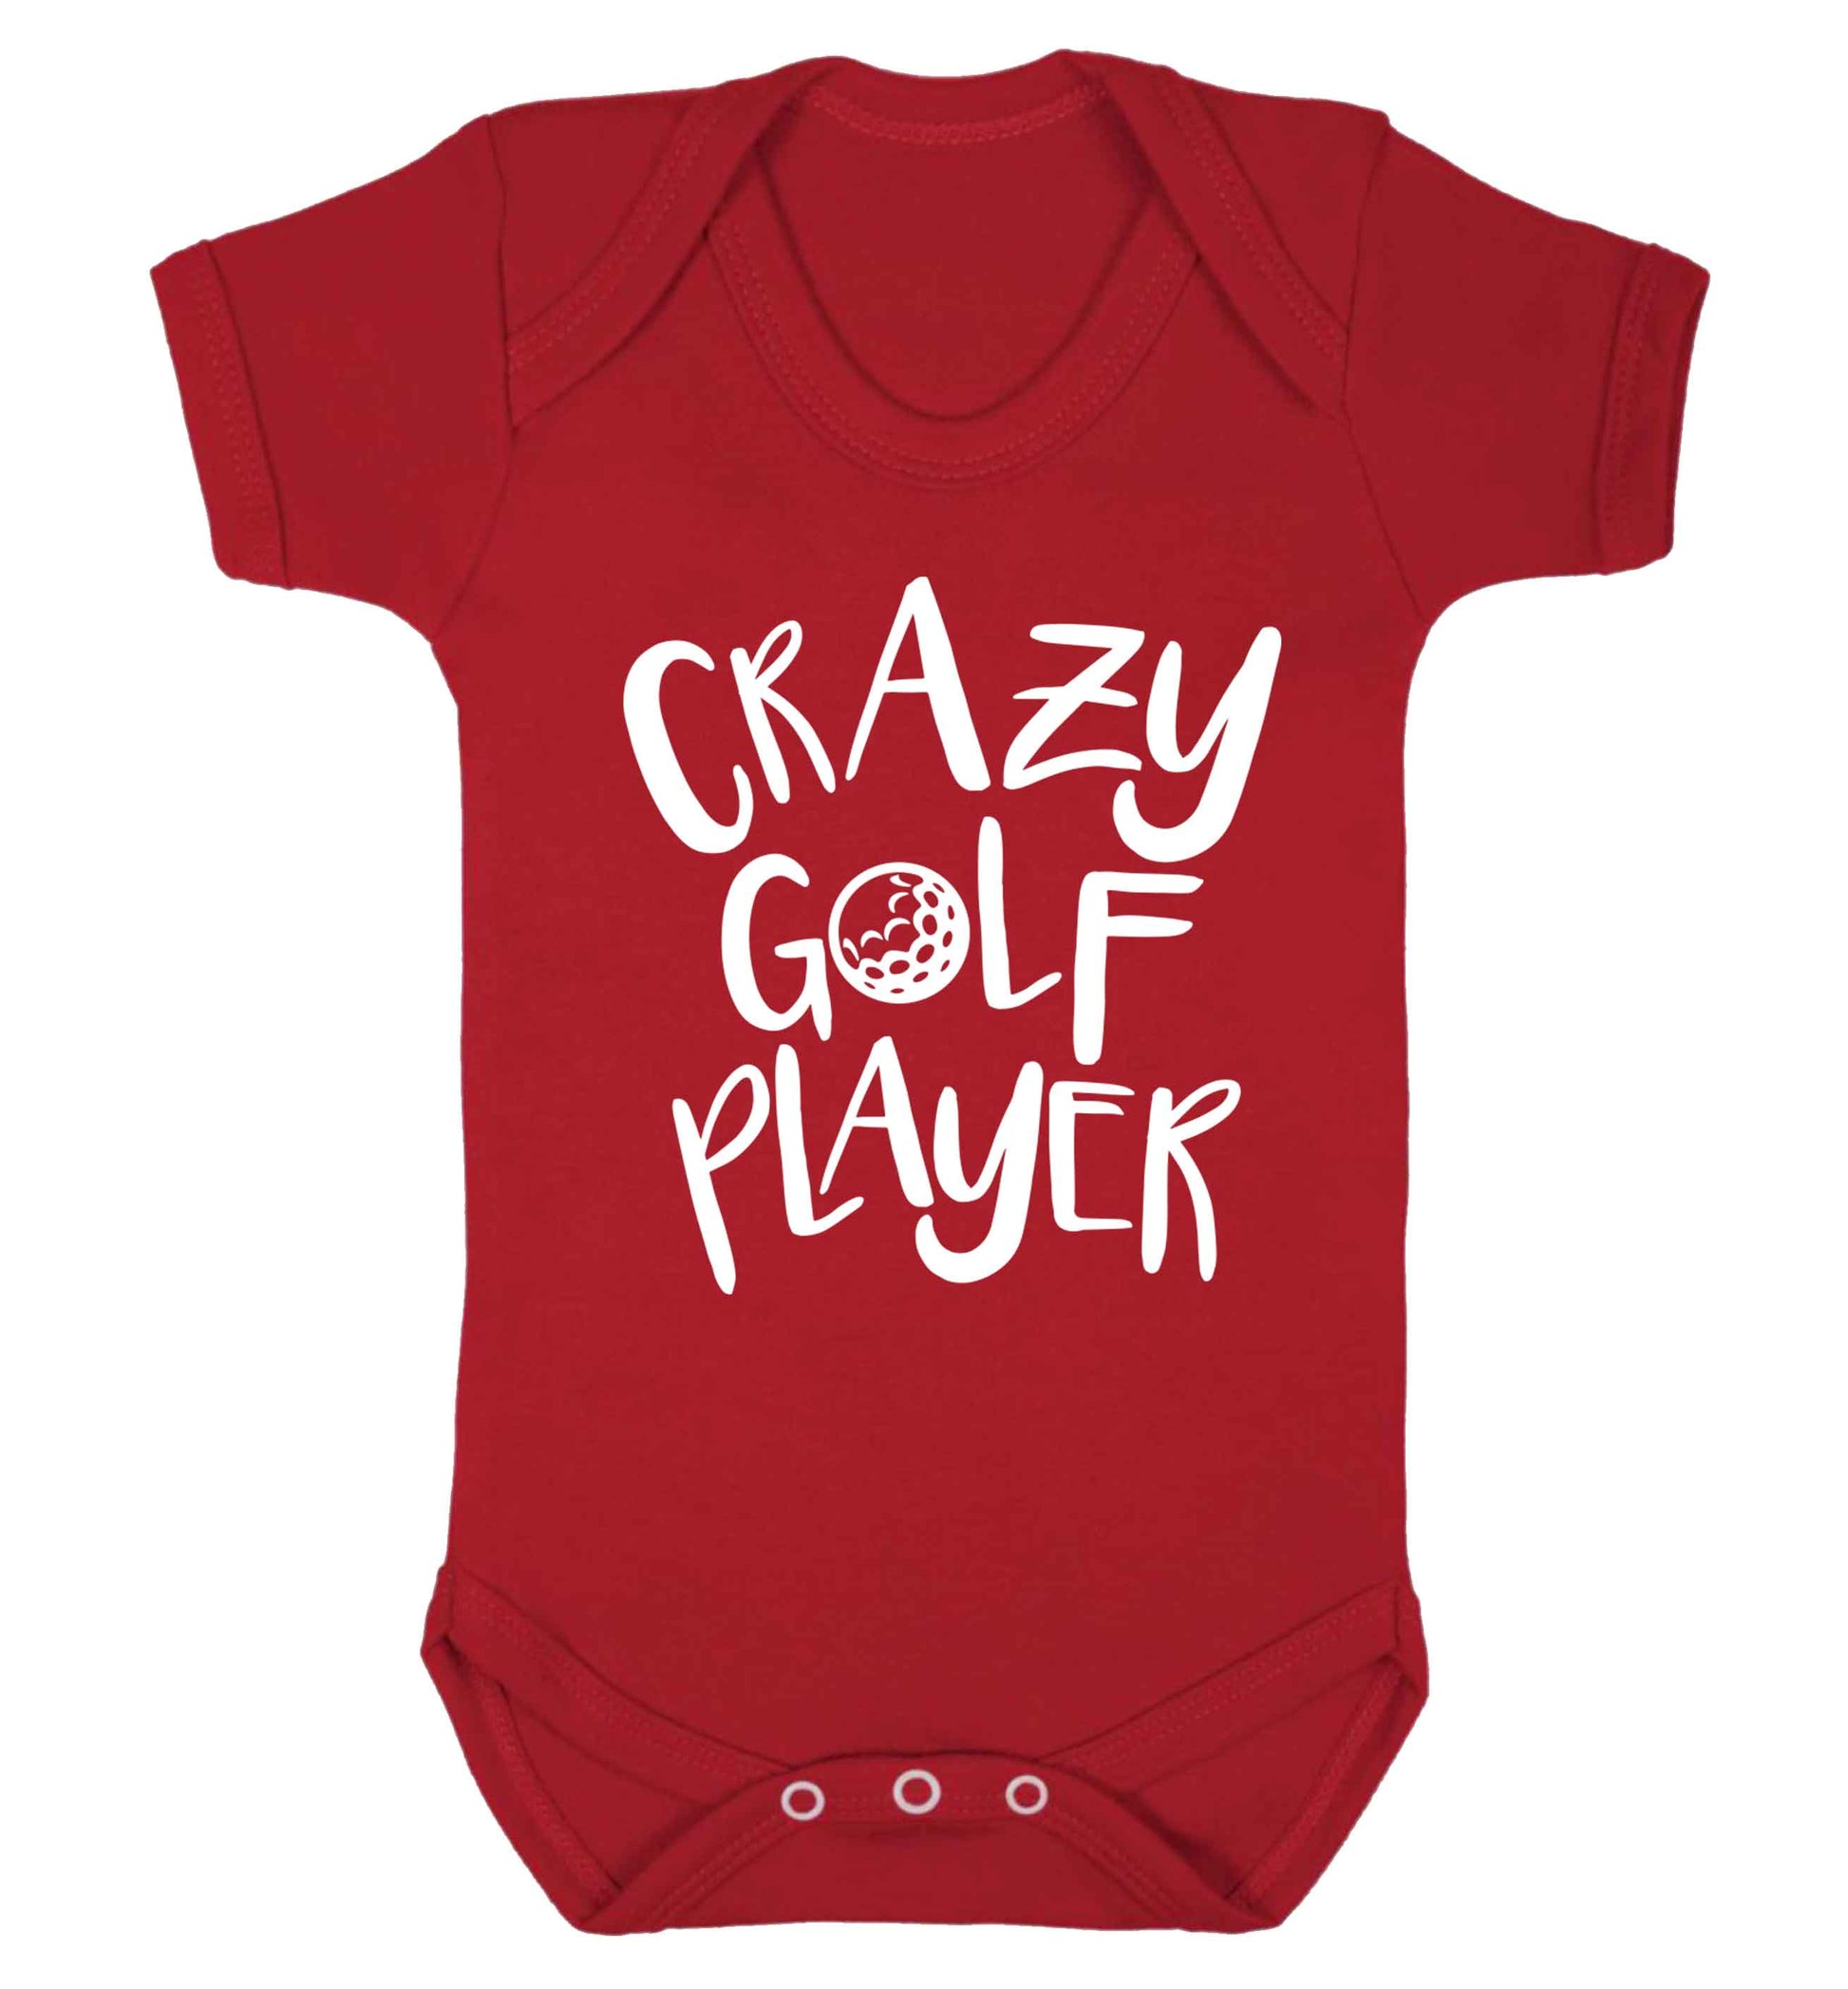 Crazy golf player Baby Vest red 18-24 months